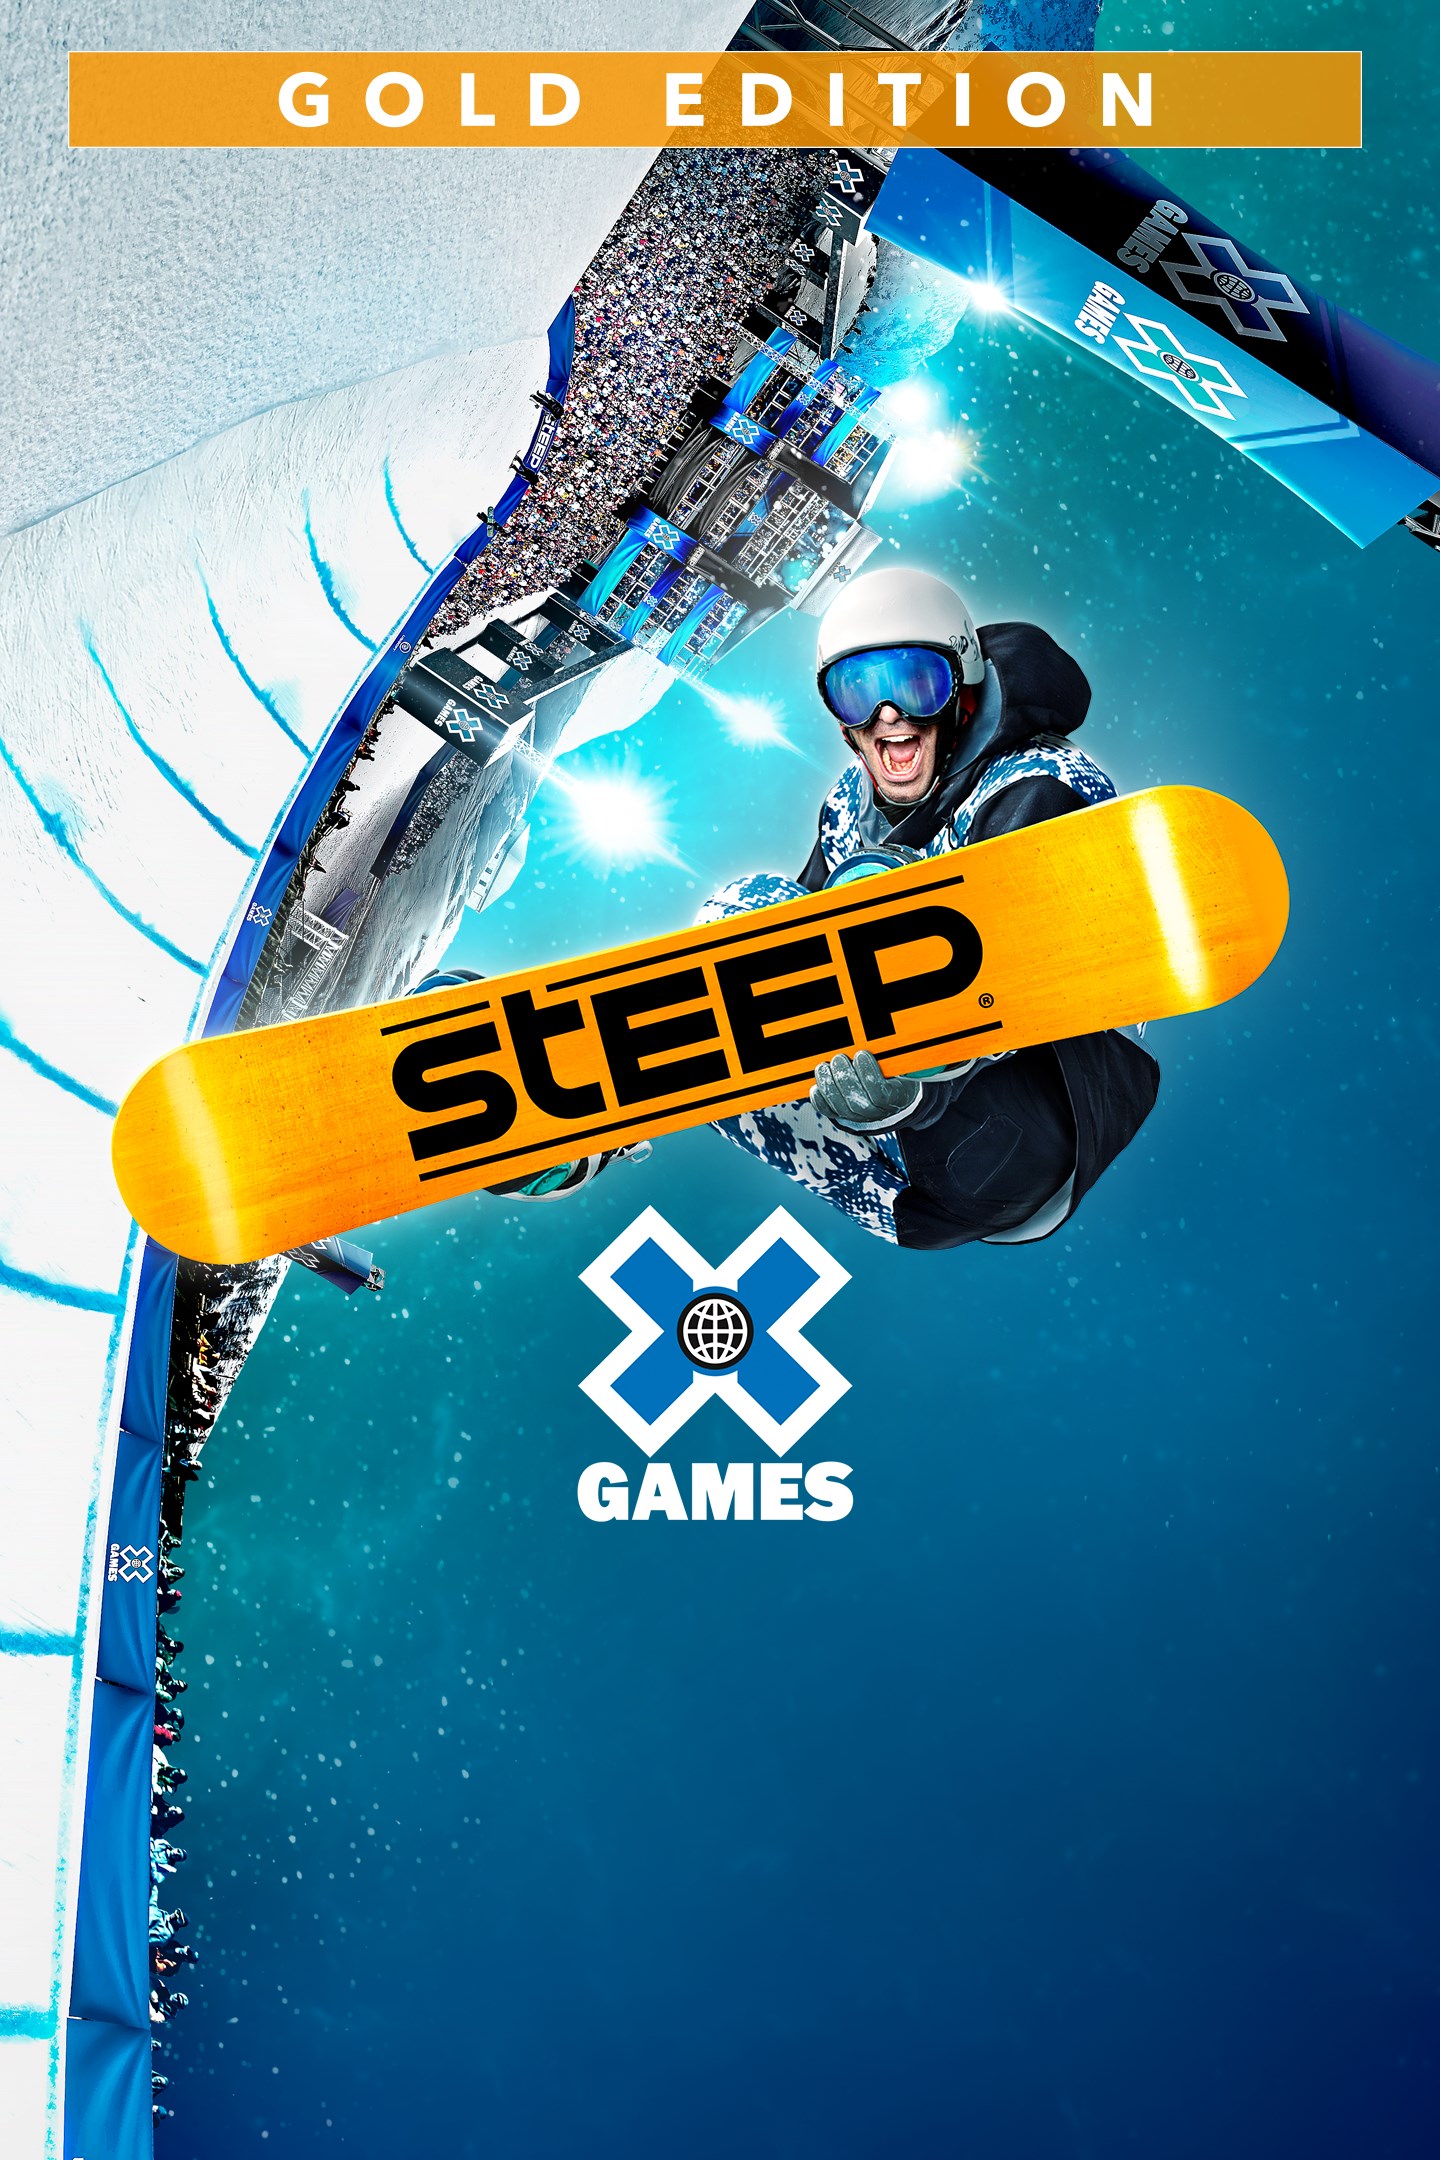 Steep X Games Gold Edition boxshot